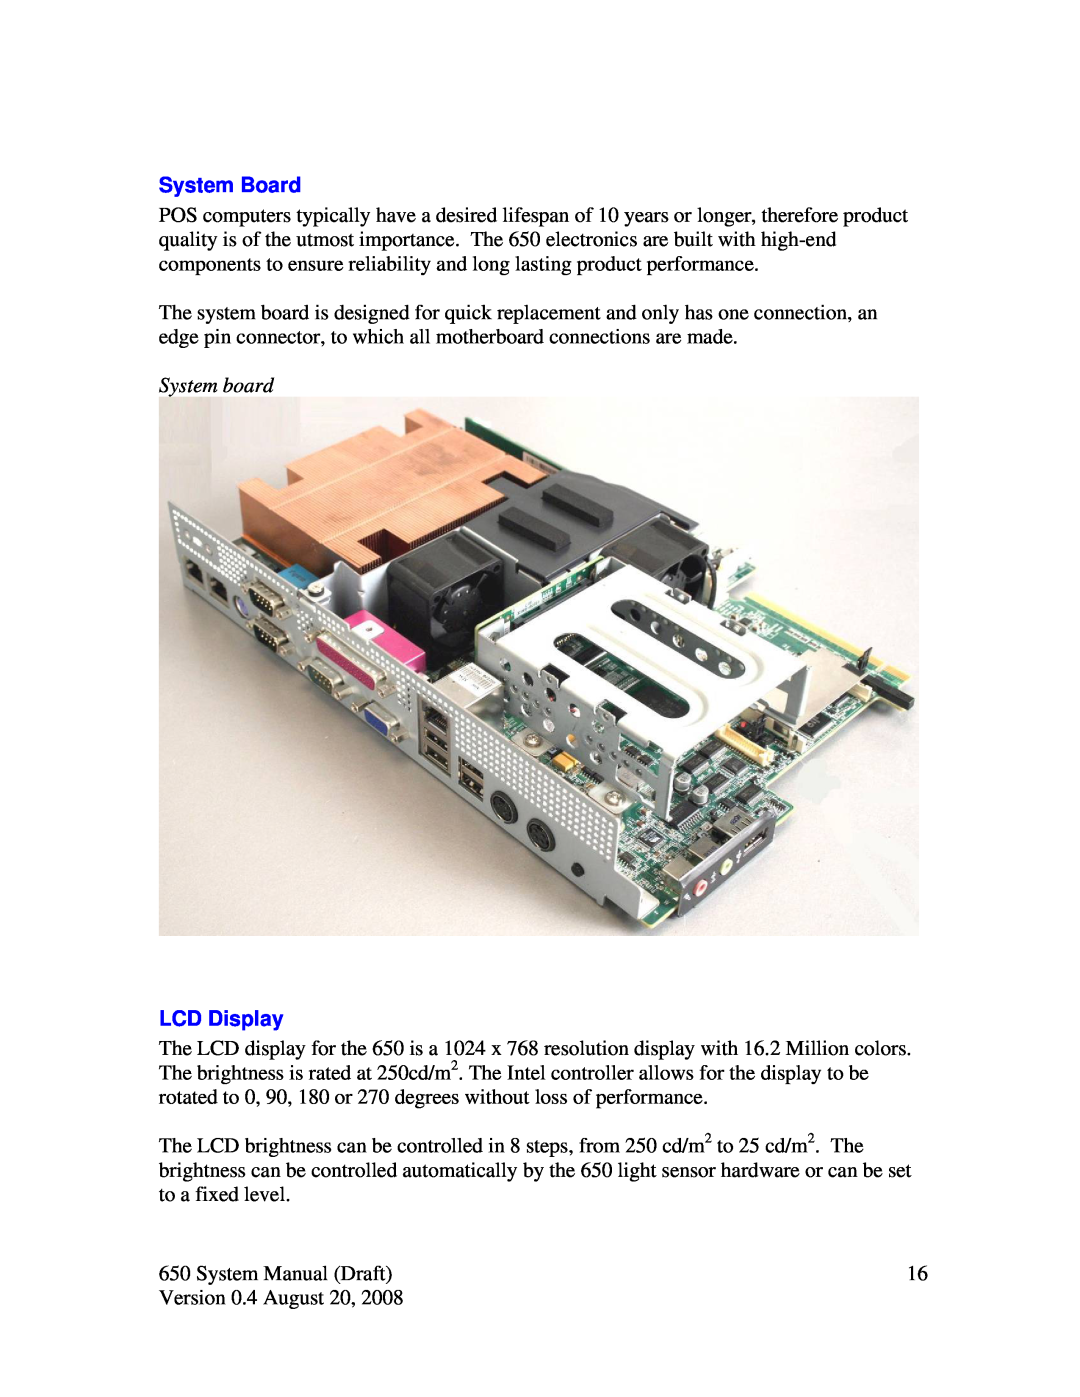 Intel J2 650 system manual System Board, System board, LCD Display 